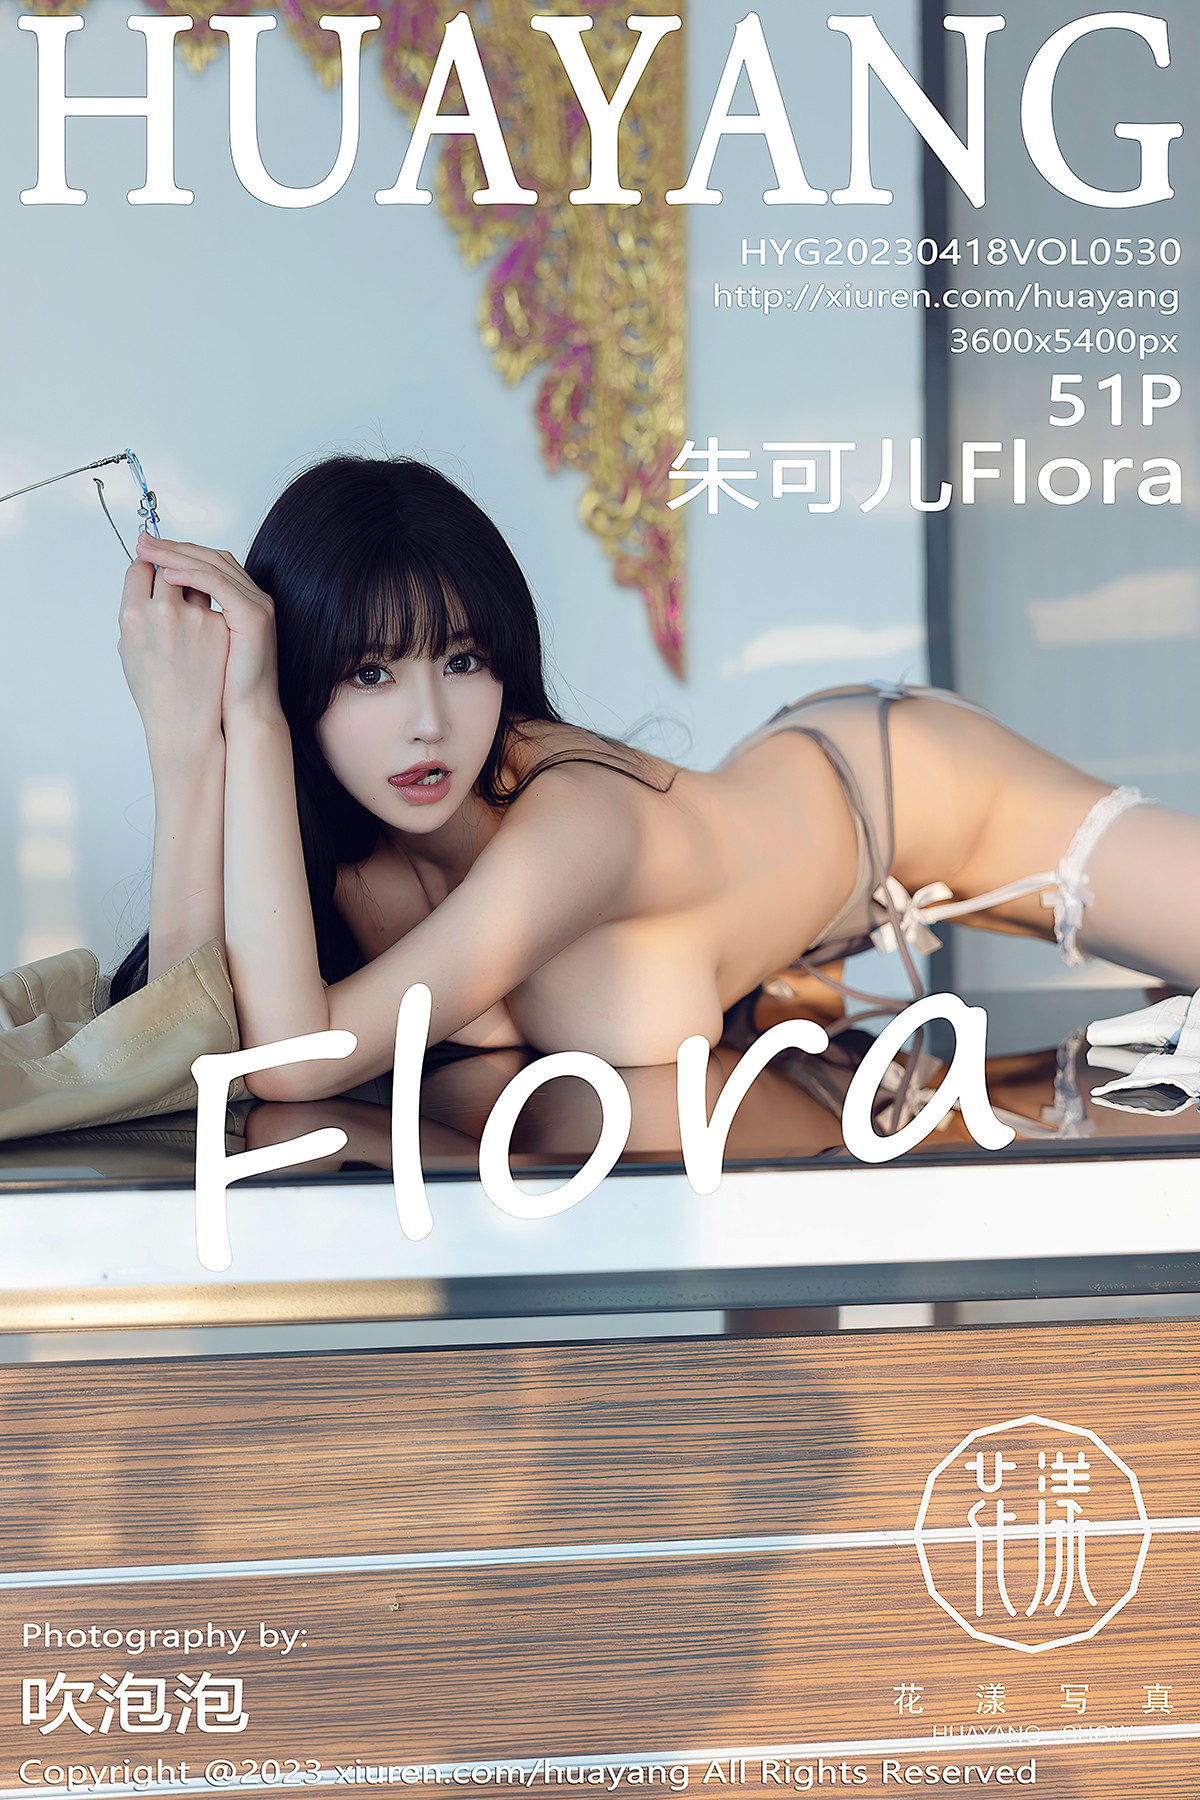 HuaYang花漾Show Vol.530 Zhu Ke Er Flora